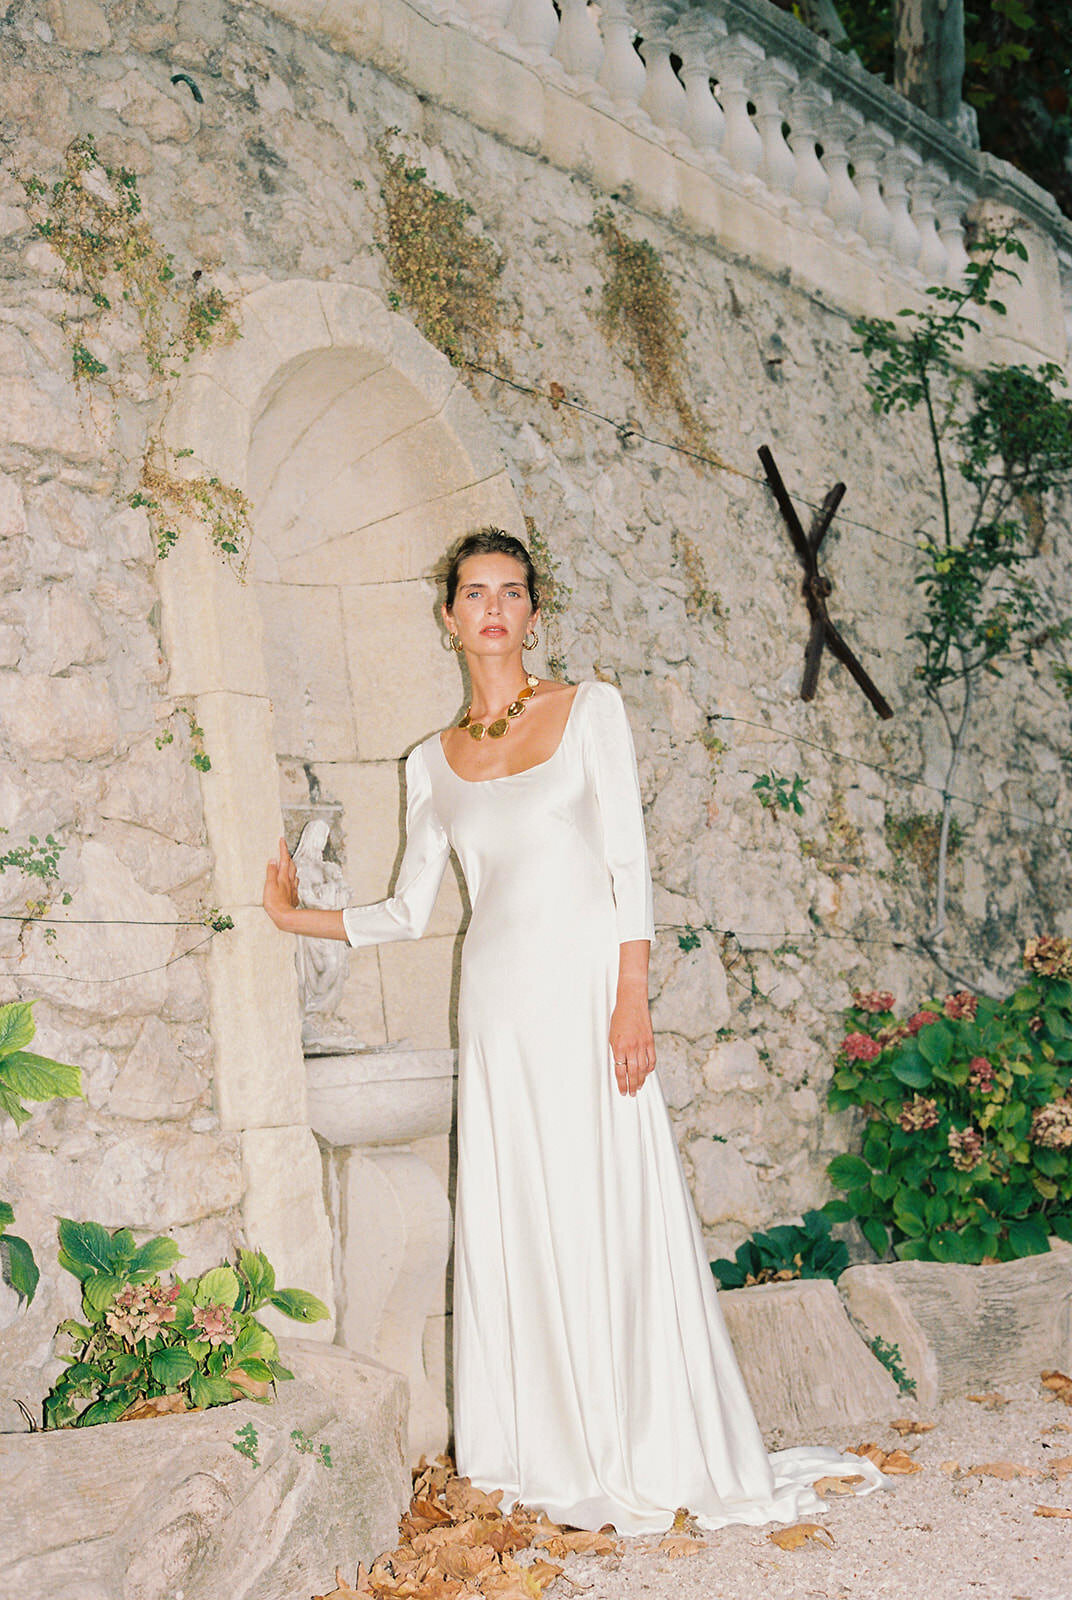 Silk wedding dress with long sleeves, modern elegant bridal gown by British designer Luna Bea